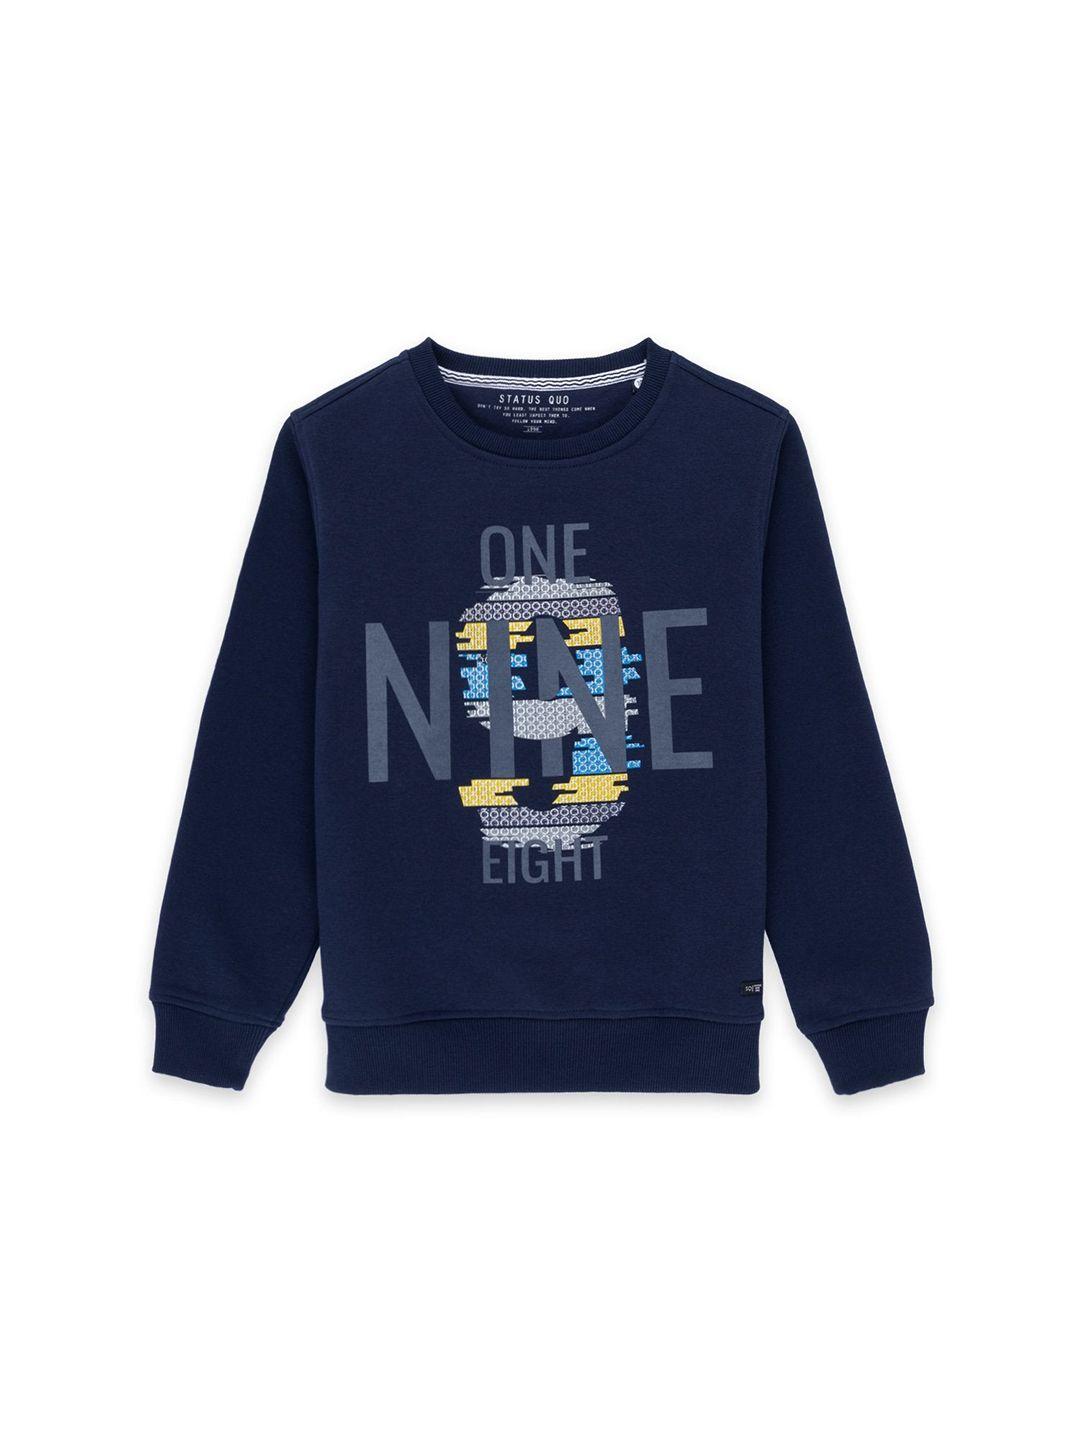 status-quo-boys-navy-blue-printed-sweatshirt